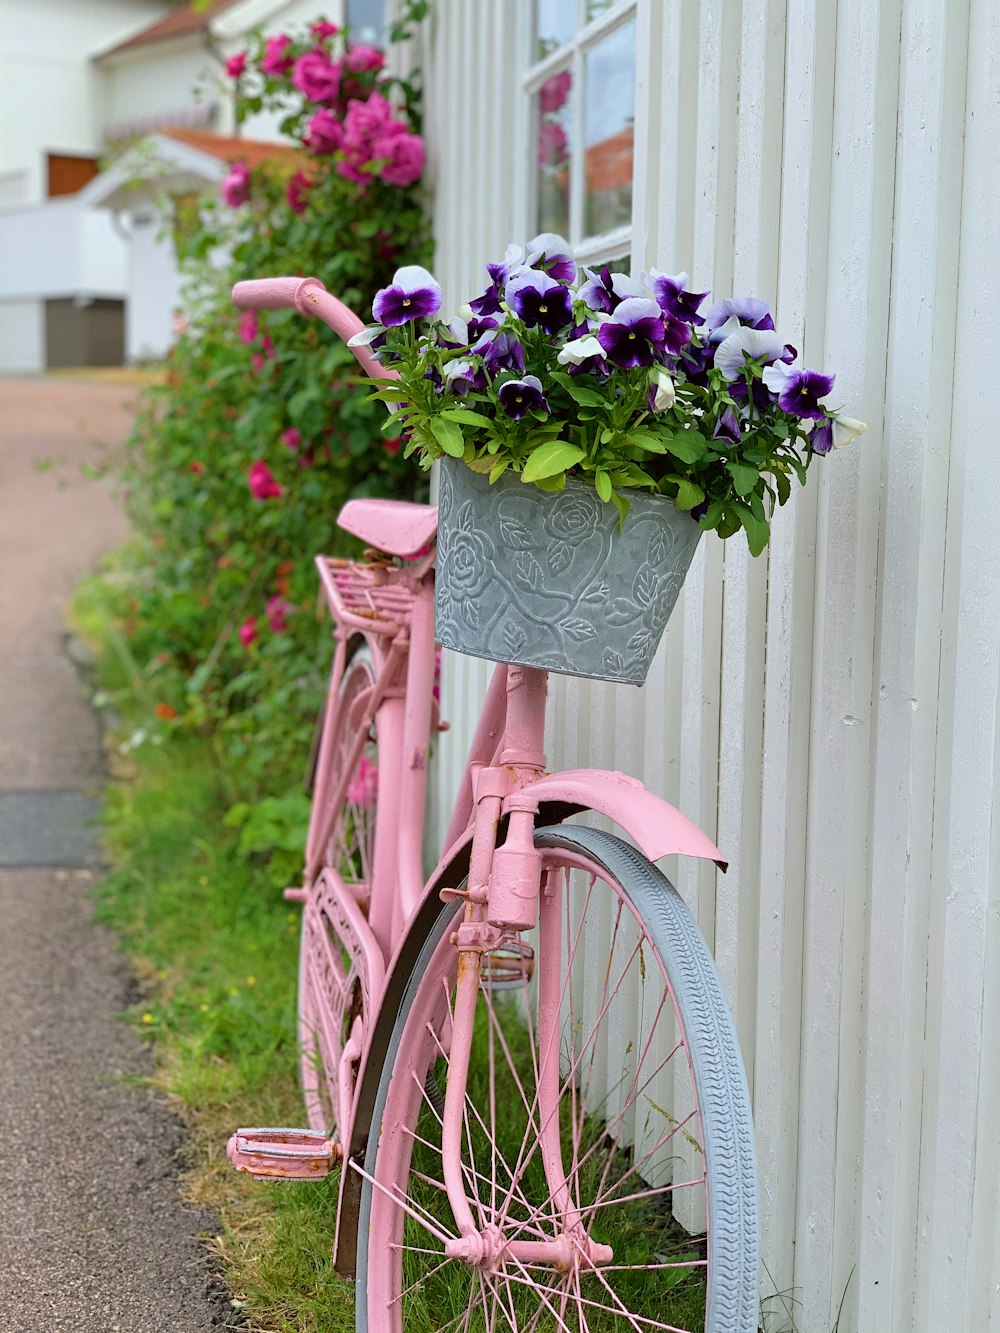 pink and purple flowers on bicycle basket photo – Free Vrango Image on  Unsplash